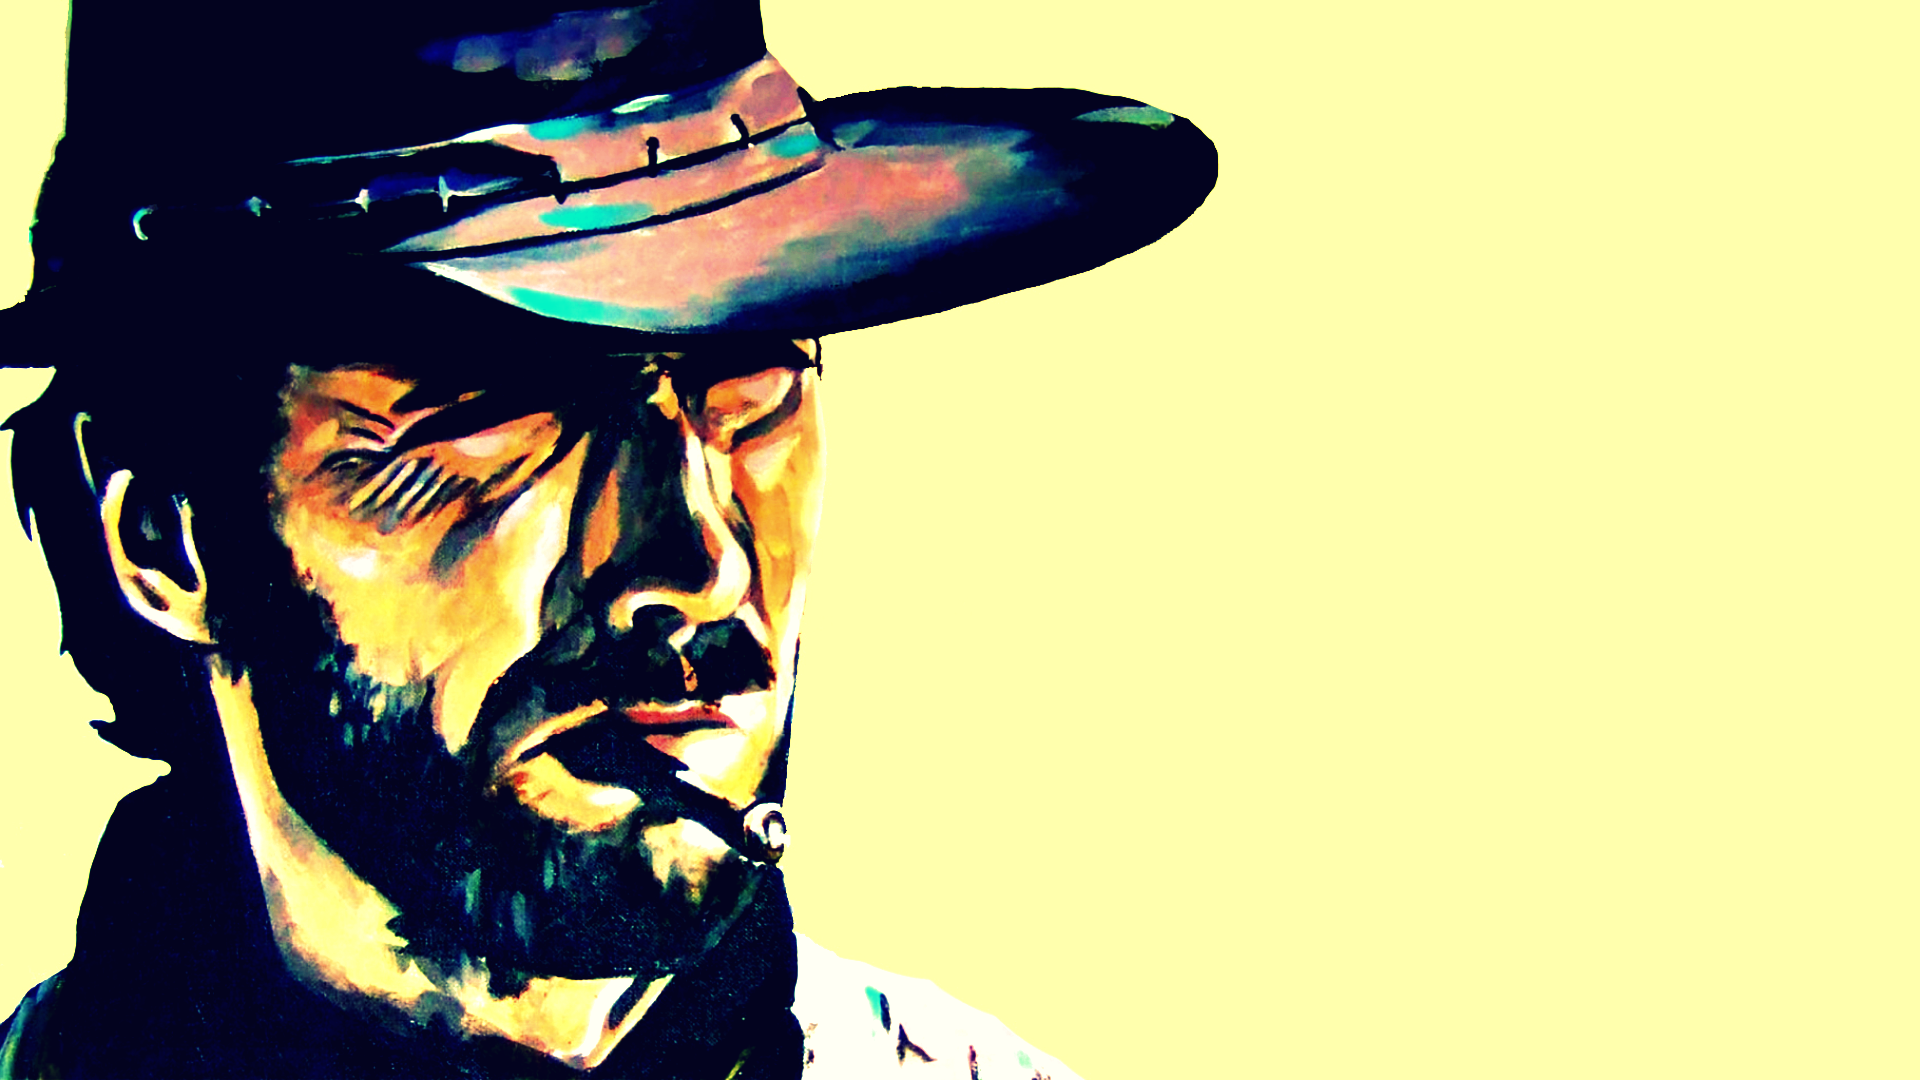 Wallpaper Animation Of Popular Western Actorpicture For Desktop